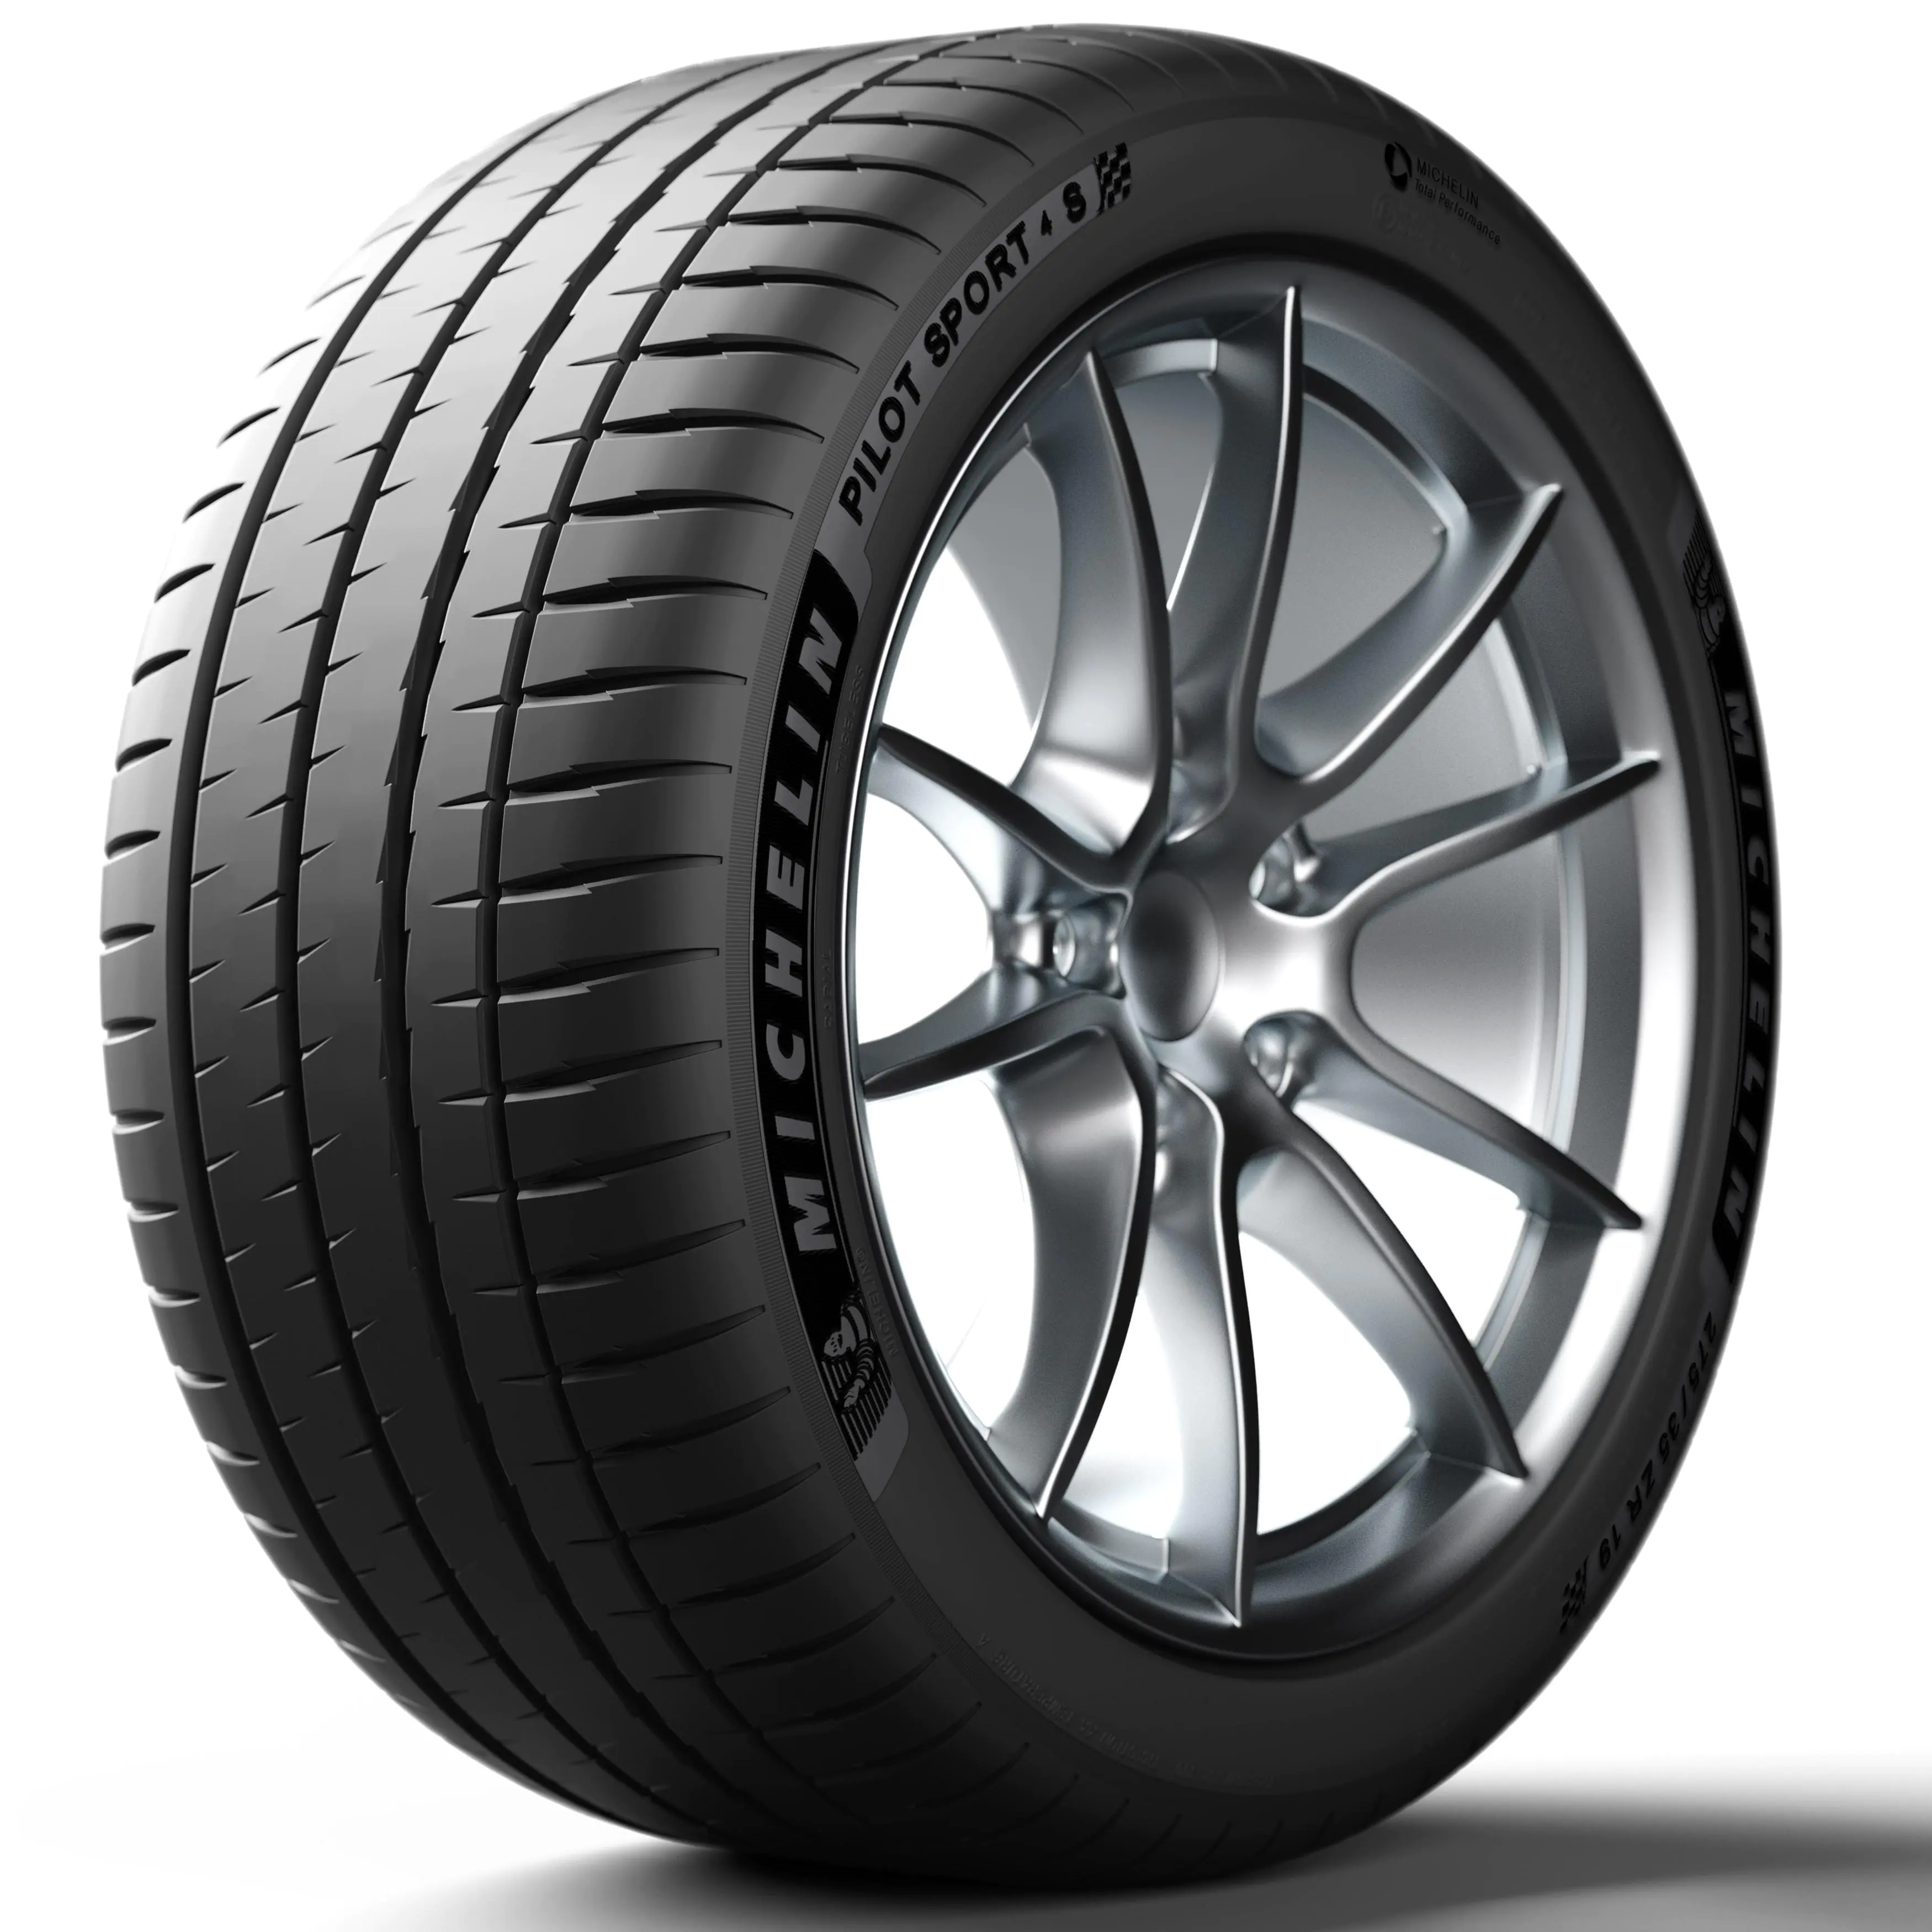 Michelin Michelin 225/35 R19 88Y PLT. SPORT 4 S ZP XL Runflat pneumatici nuovi Estivo 